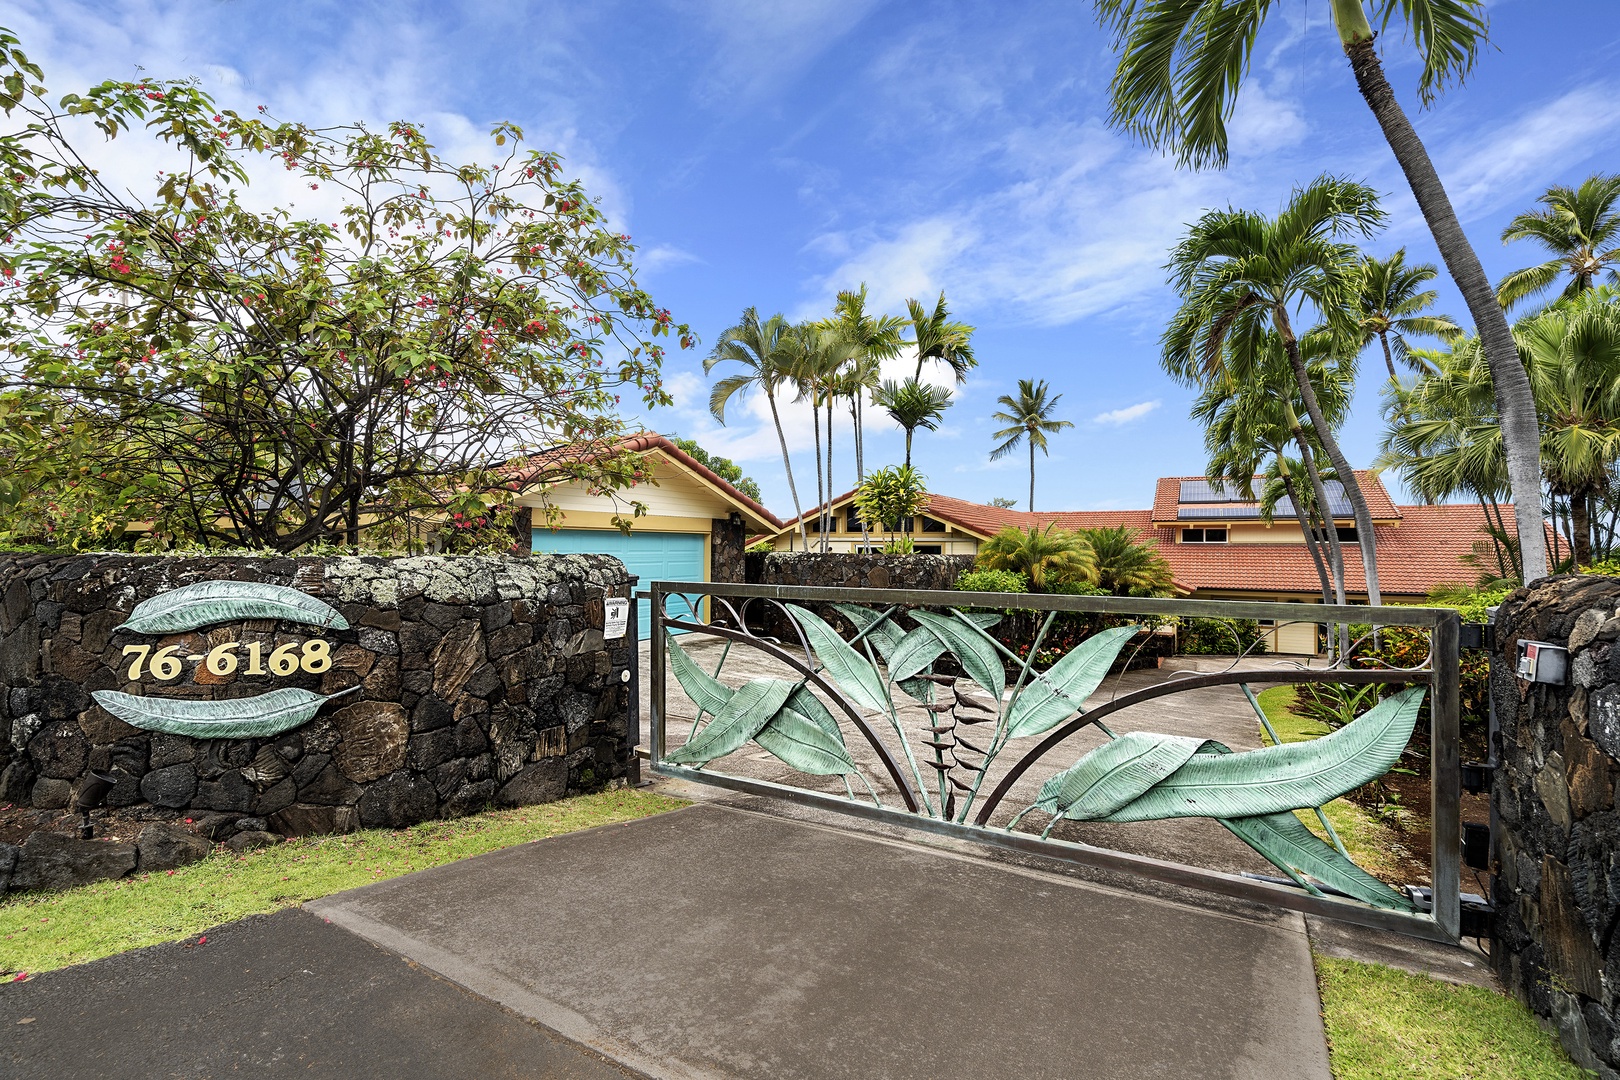 Kailua Kona Vacation Rentals, Hale Pua - Artistic front gate at the entrance to Hale Pua